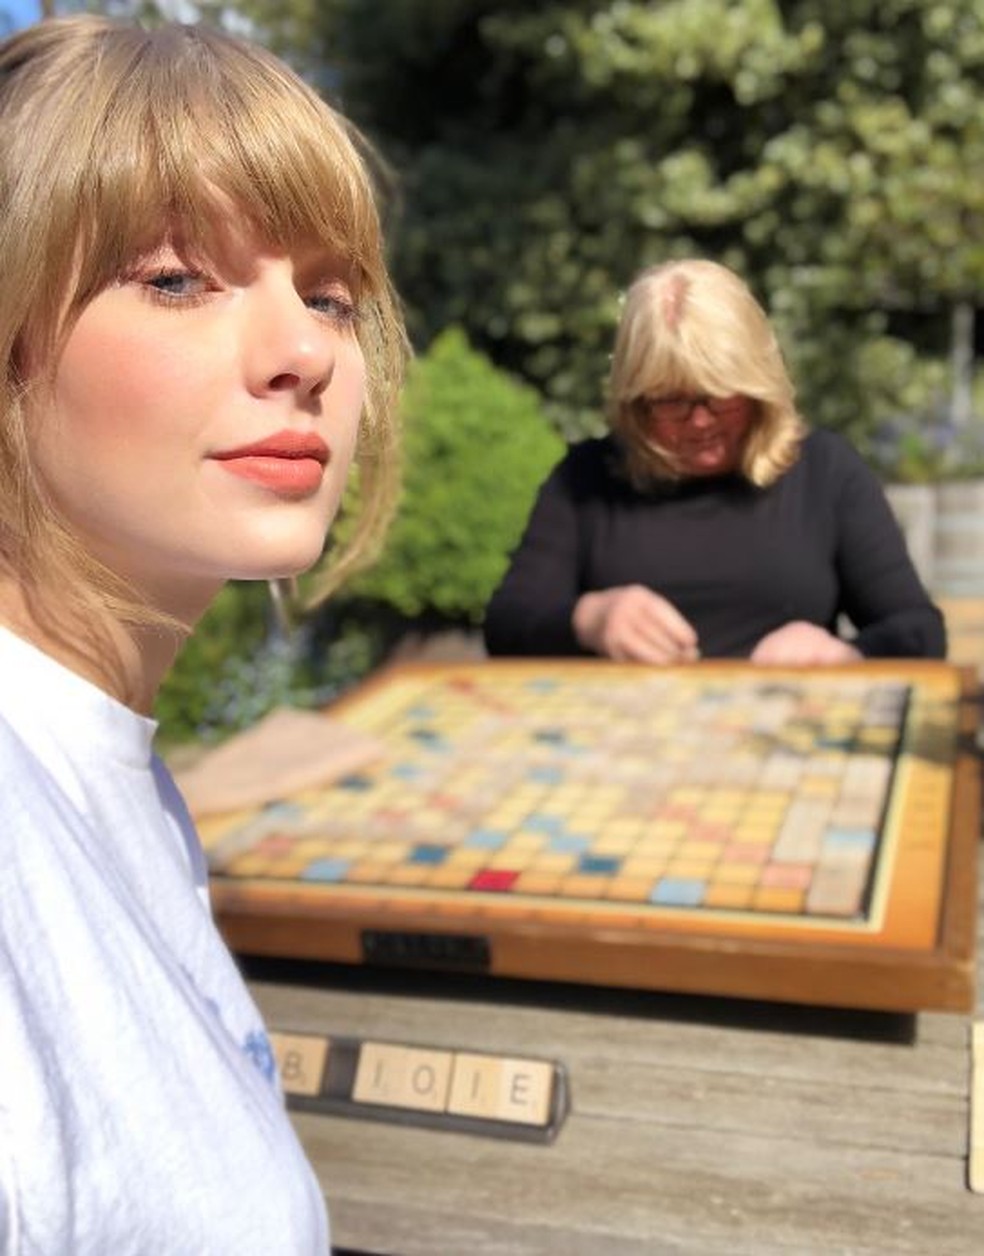 Andrea, mãe de Taylor Swift — Foto: reprodução/ instagram e Twitter